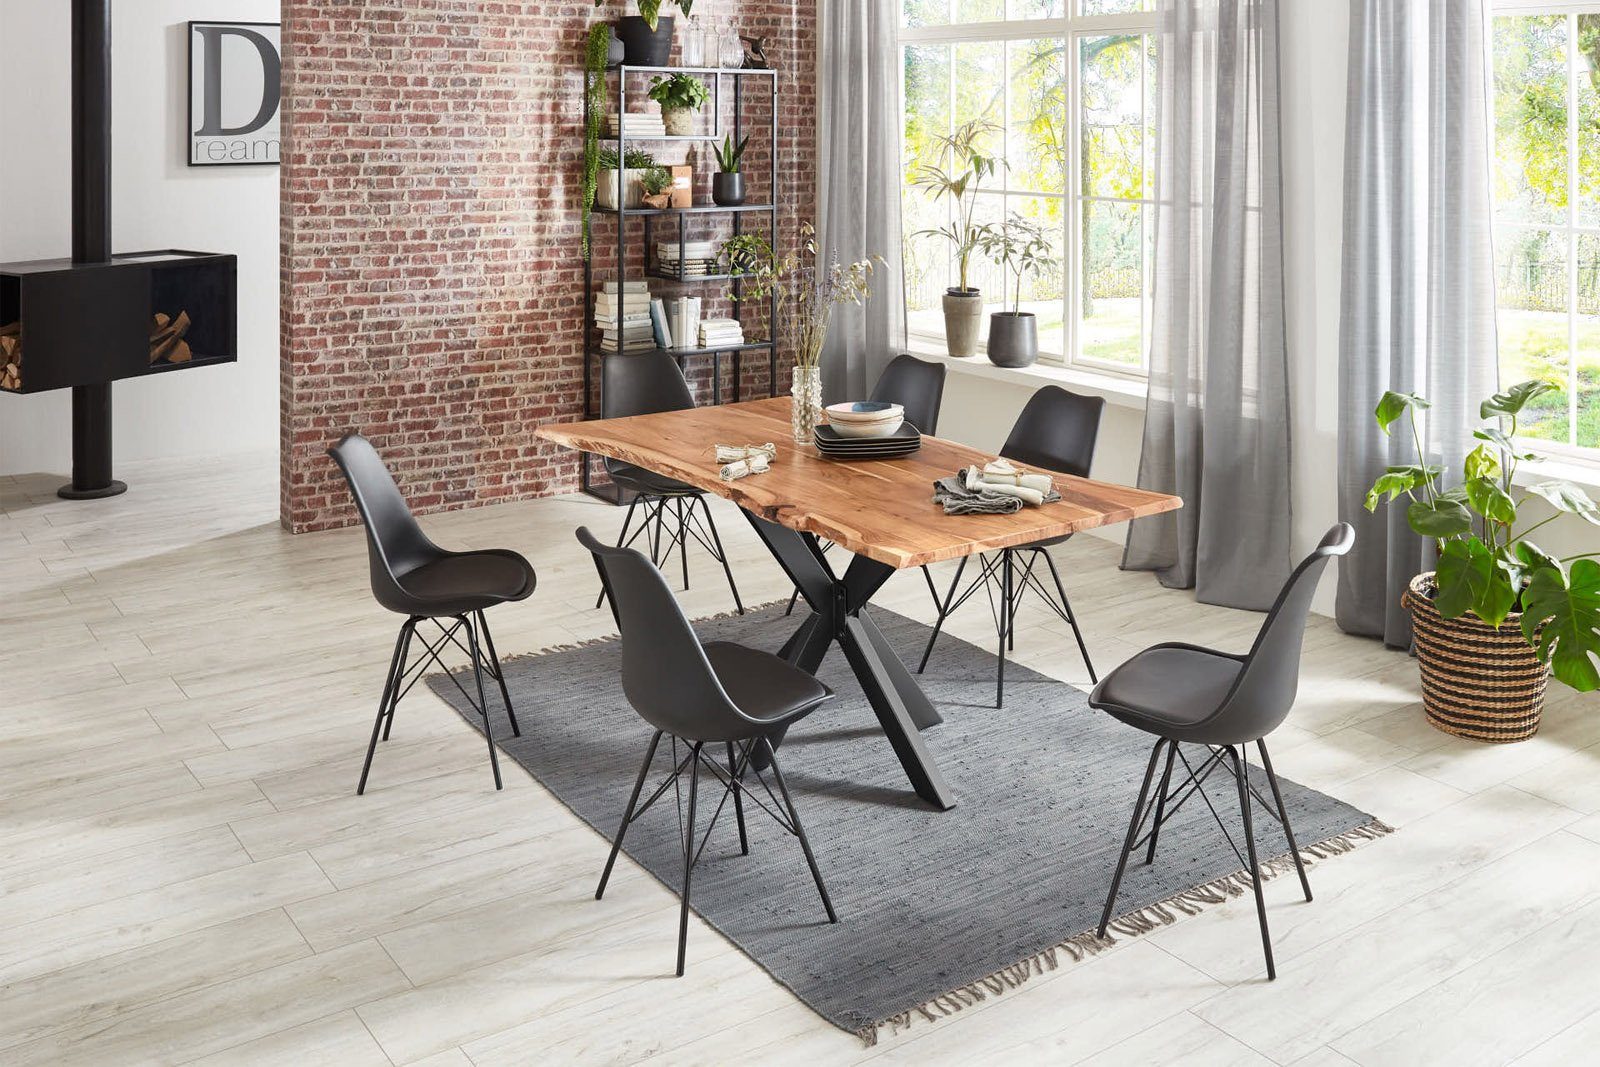 SAM® Essgruppe Harbor, Stühle massiv, 6 Baumkante Spider-Form Metallgestell Akazienholz, 